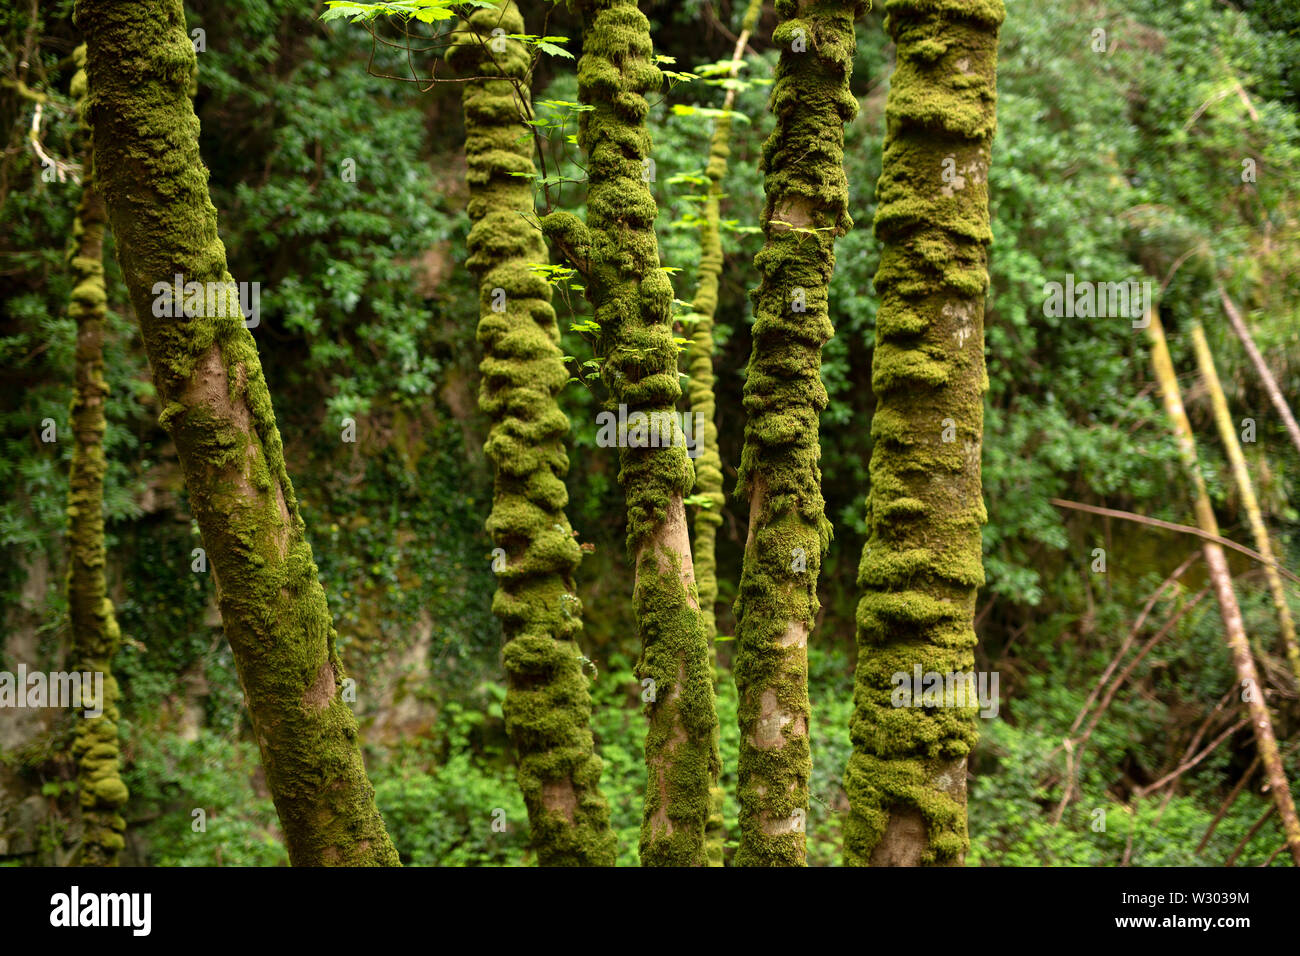 Moss growing on trees. Stock Photo